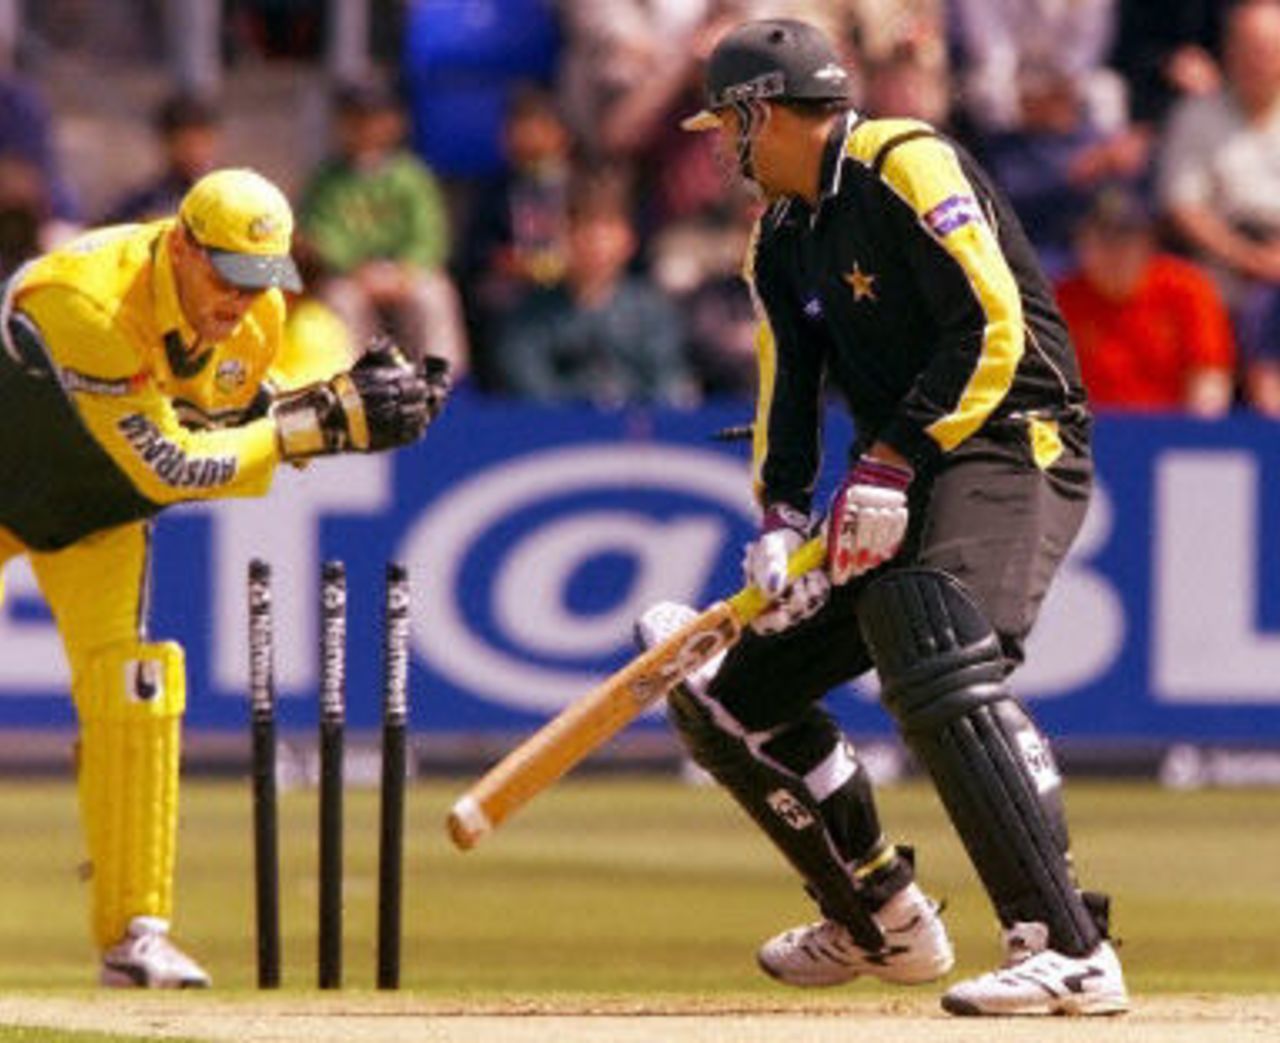 Inzamam-ul-Haq looks back at Adam Gilchrist stumping him, 2nd ODI at Cardiff, 9 June 2001.